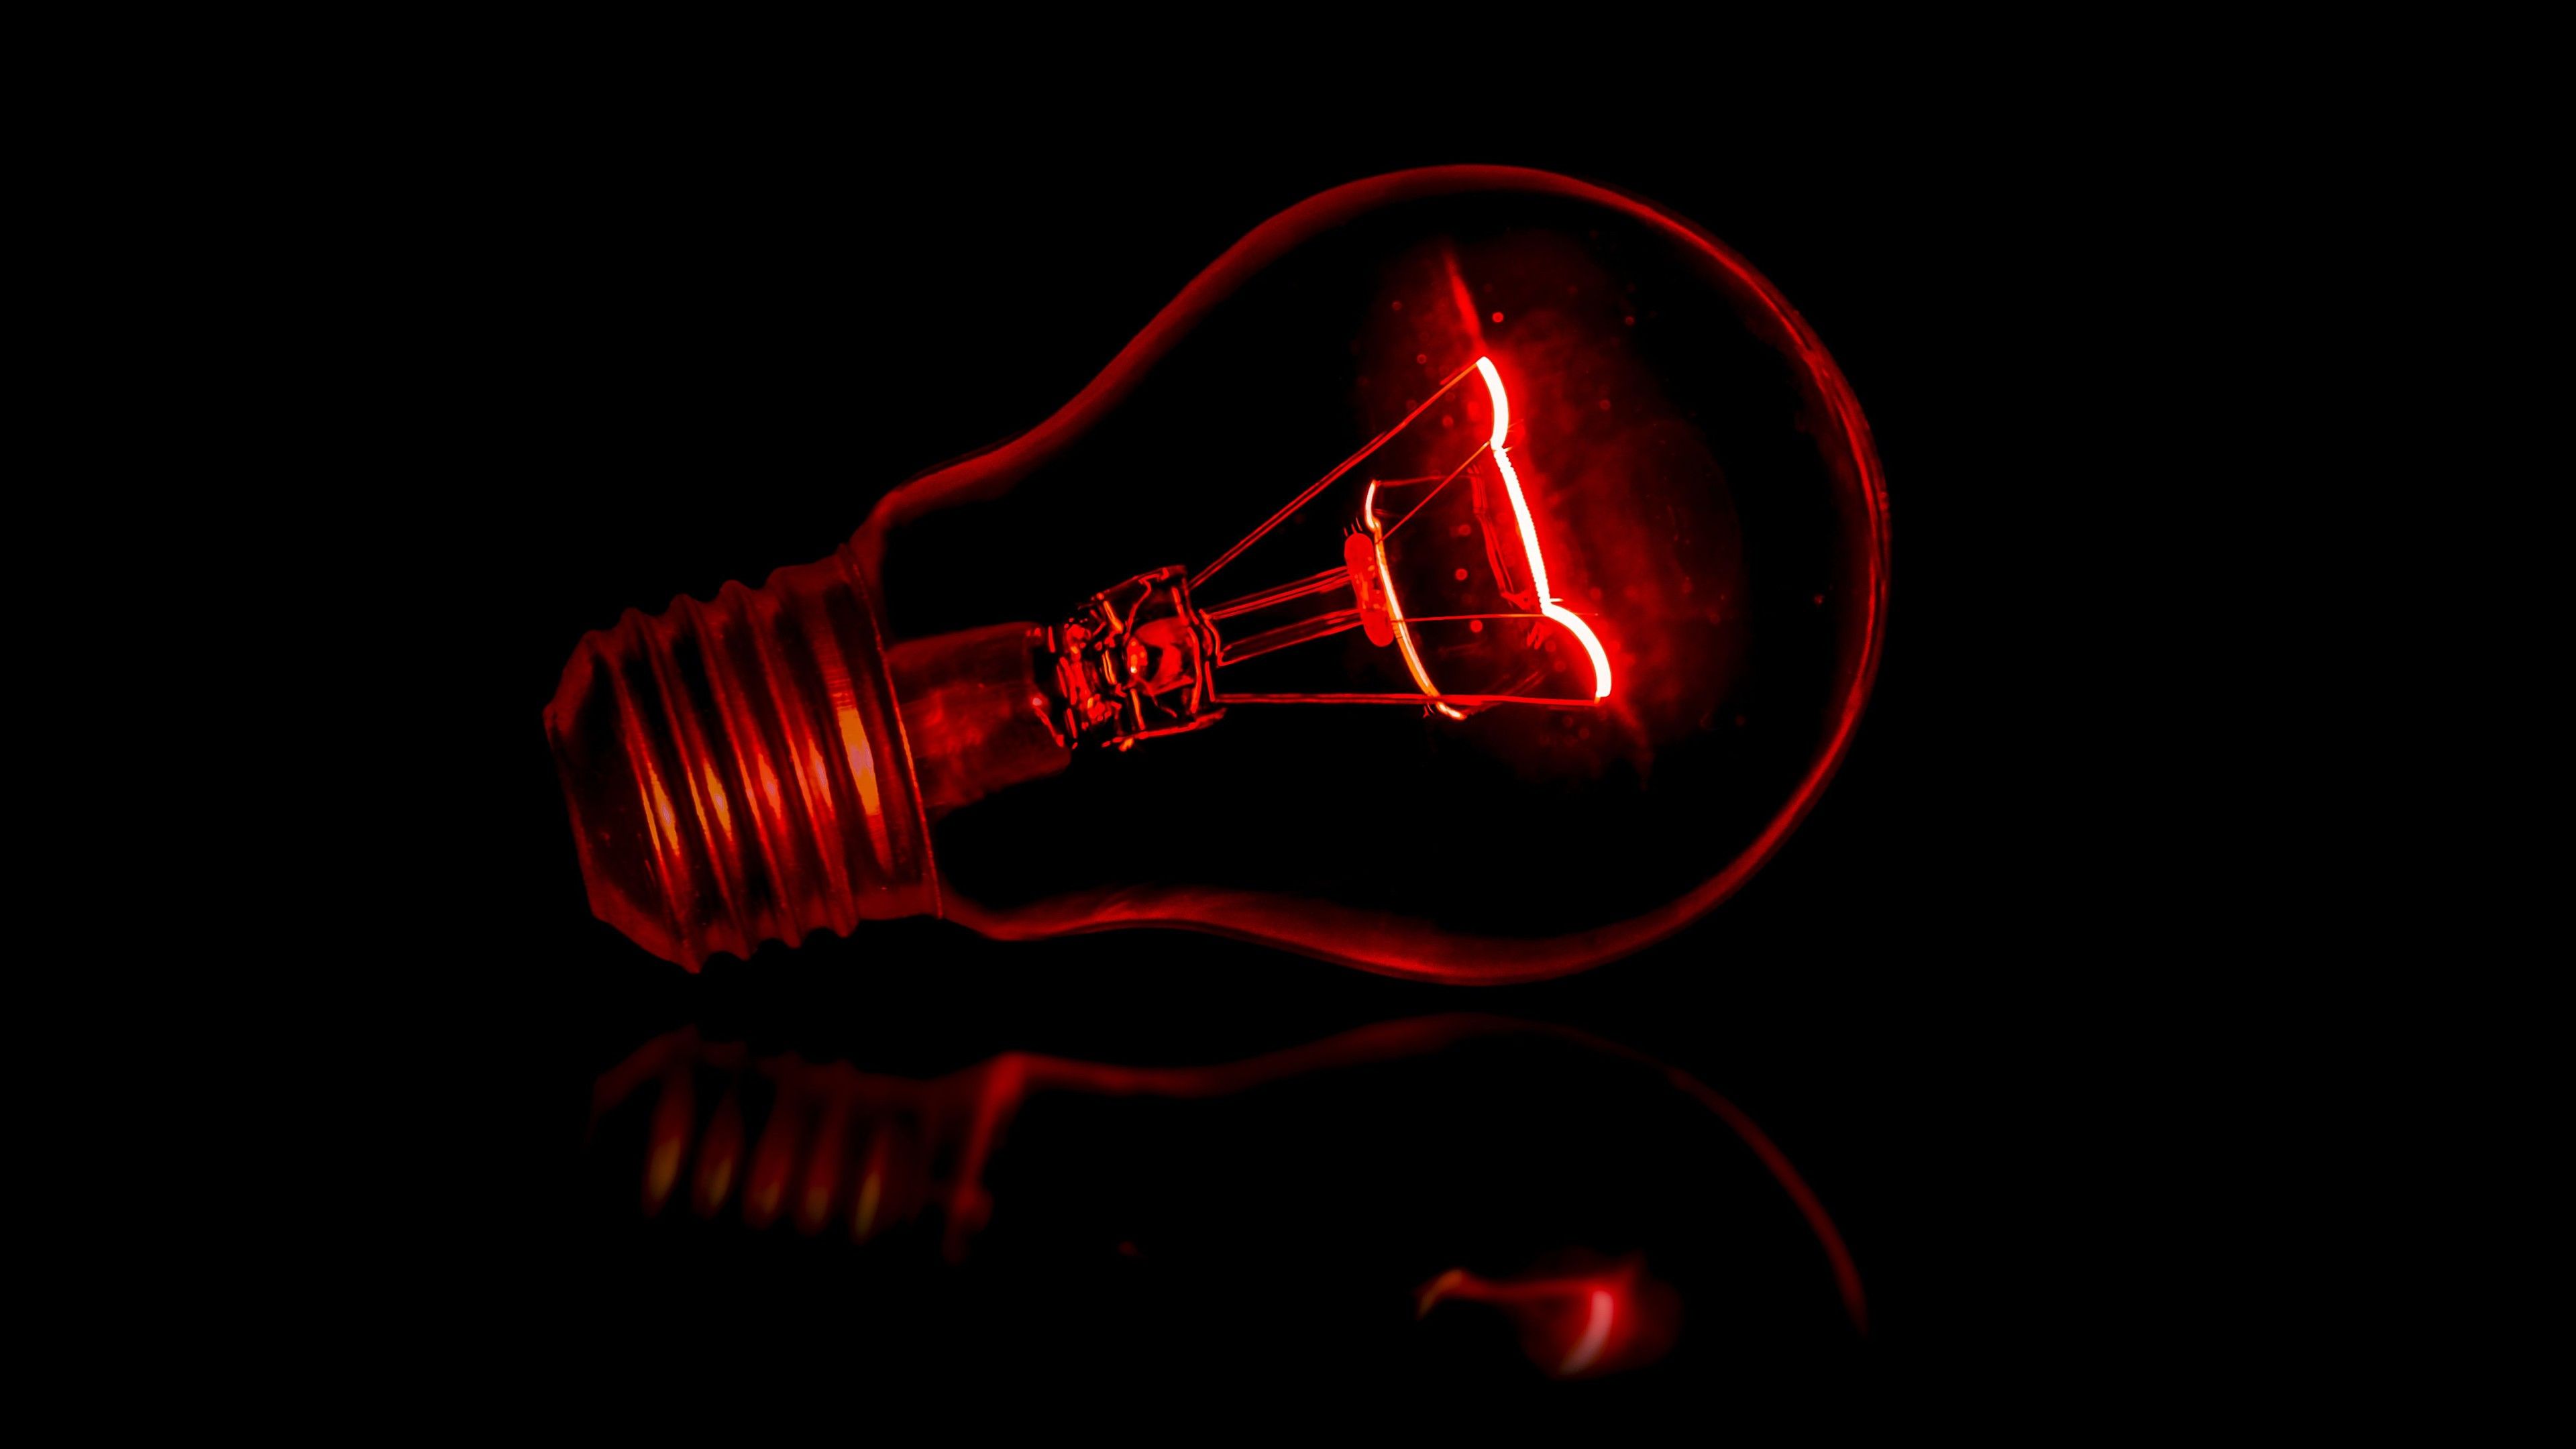 A red light bulb in a dark room. - Light red